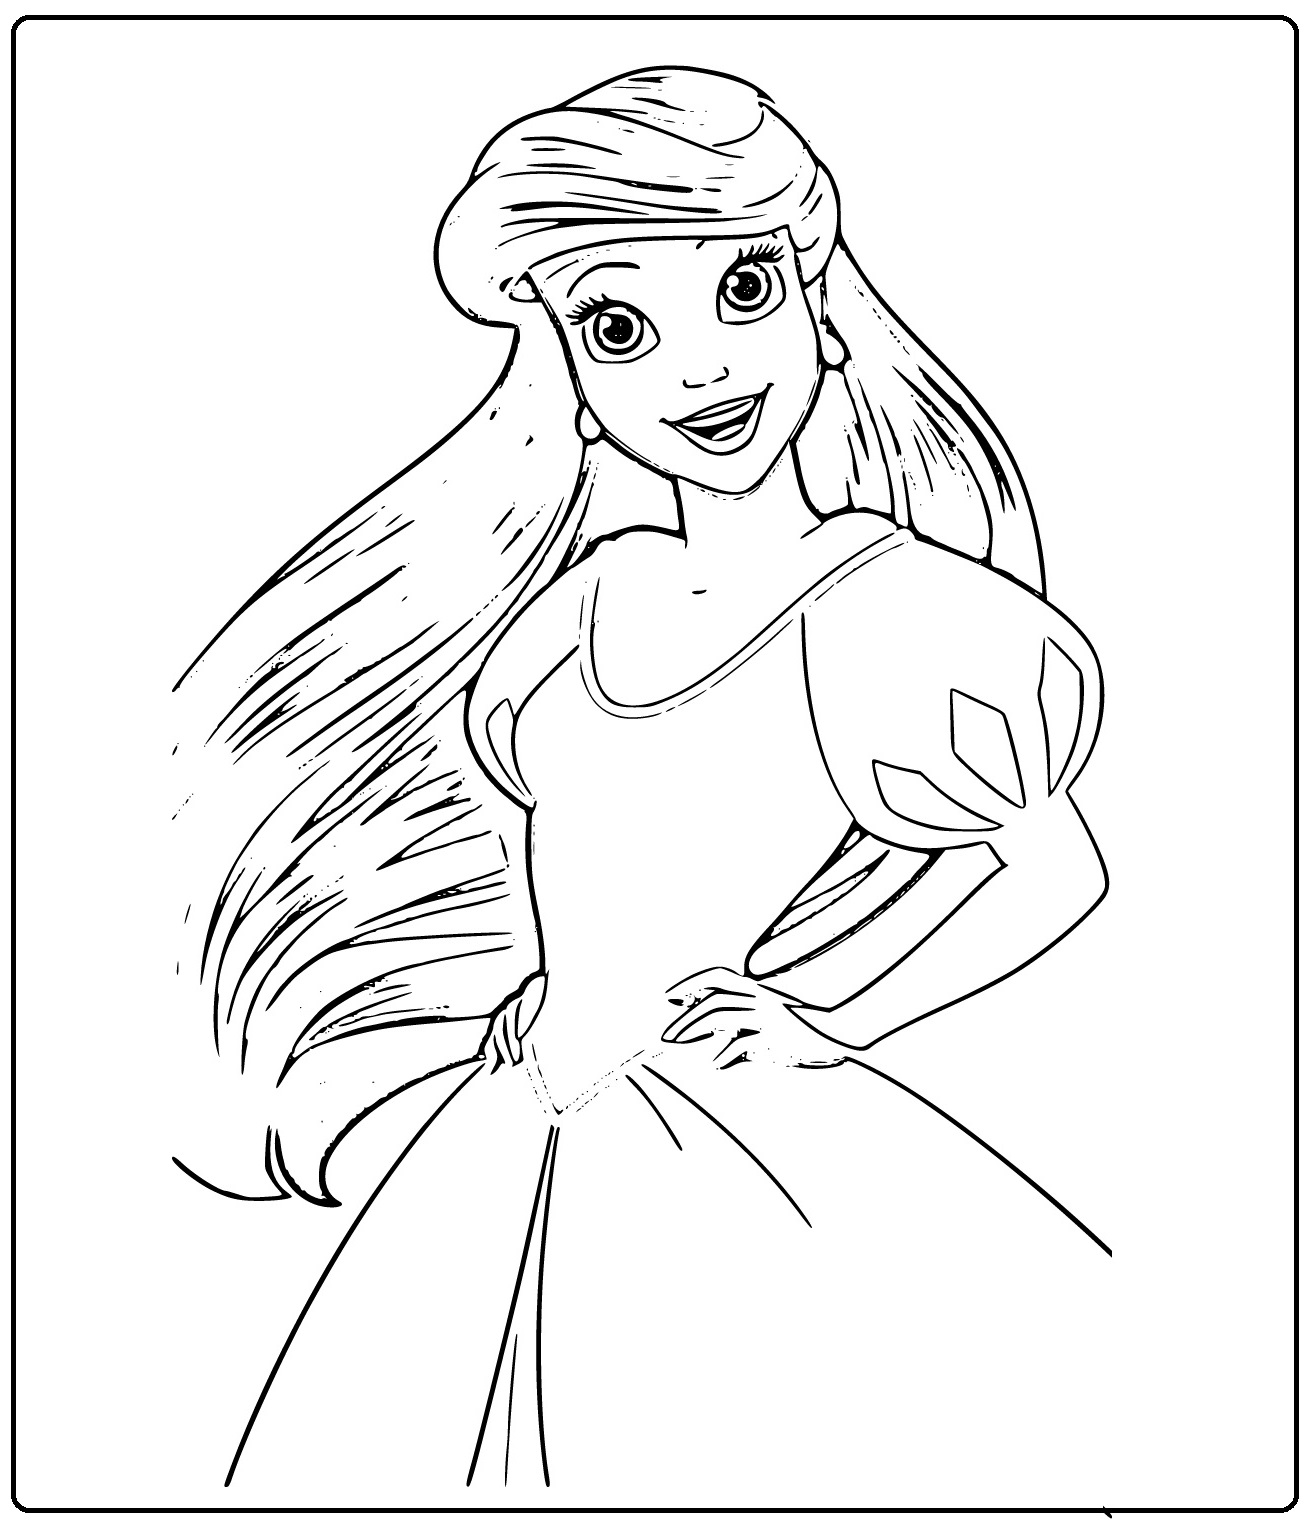 Princess Ariel as Human The Little Mermaid sheet - SheetalColor.com